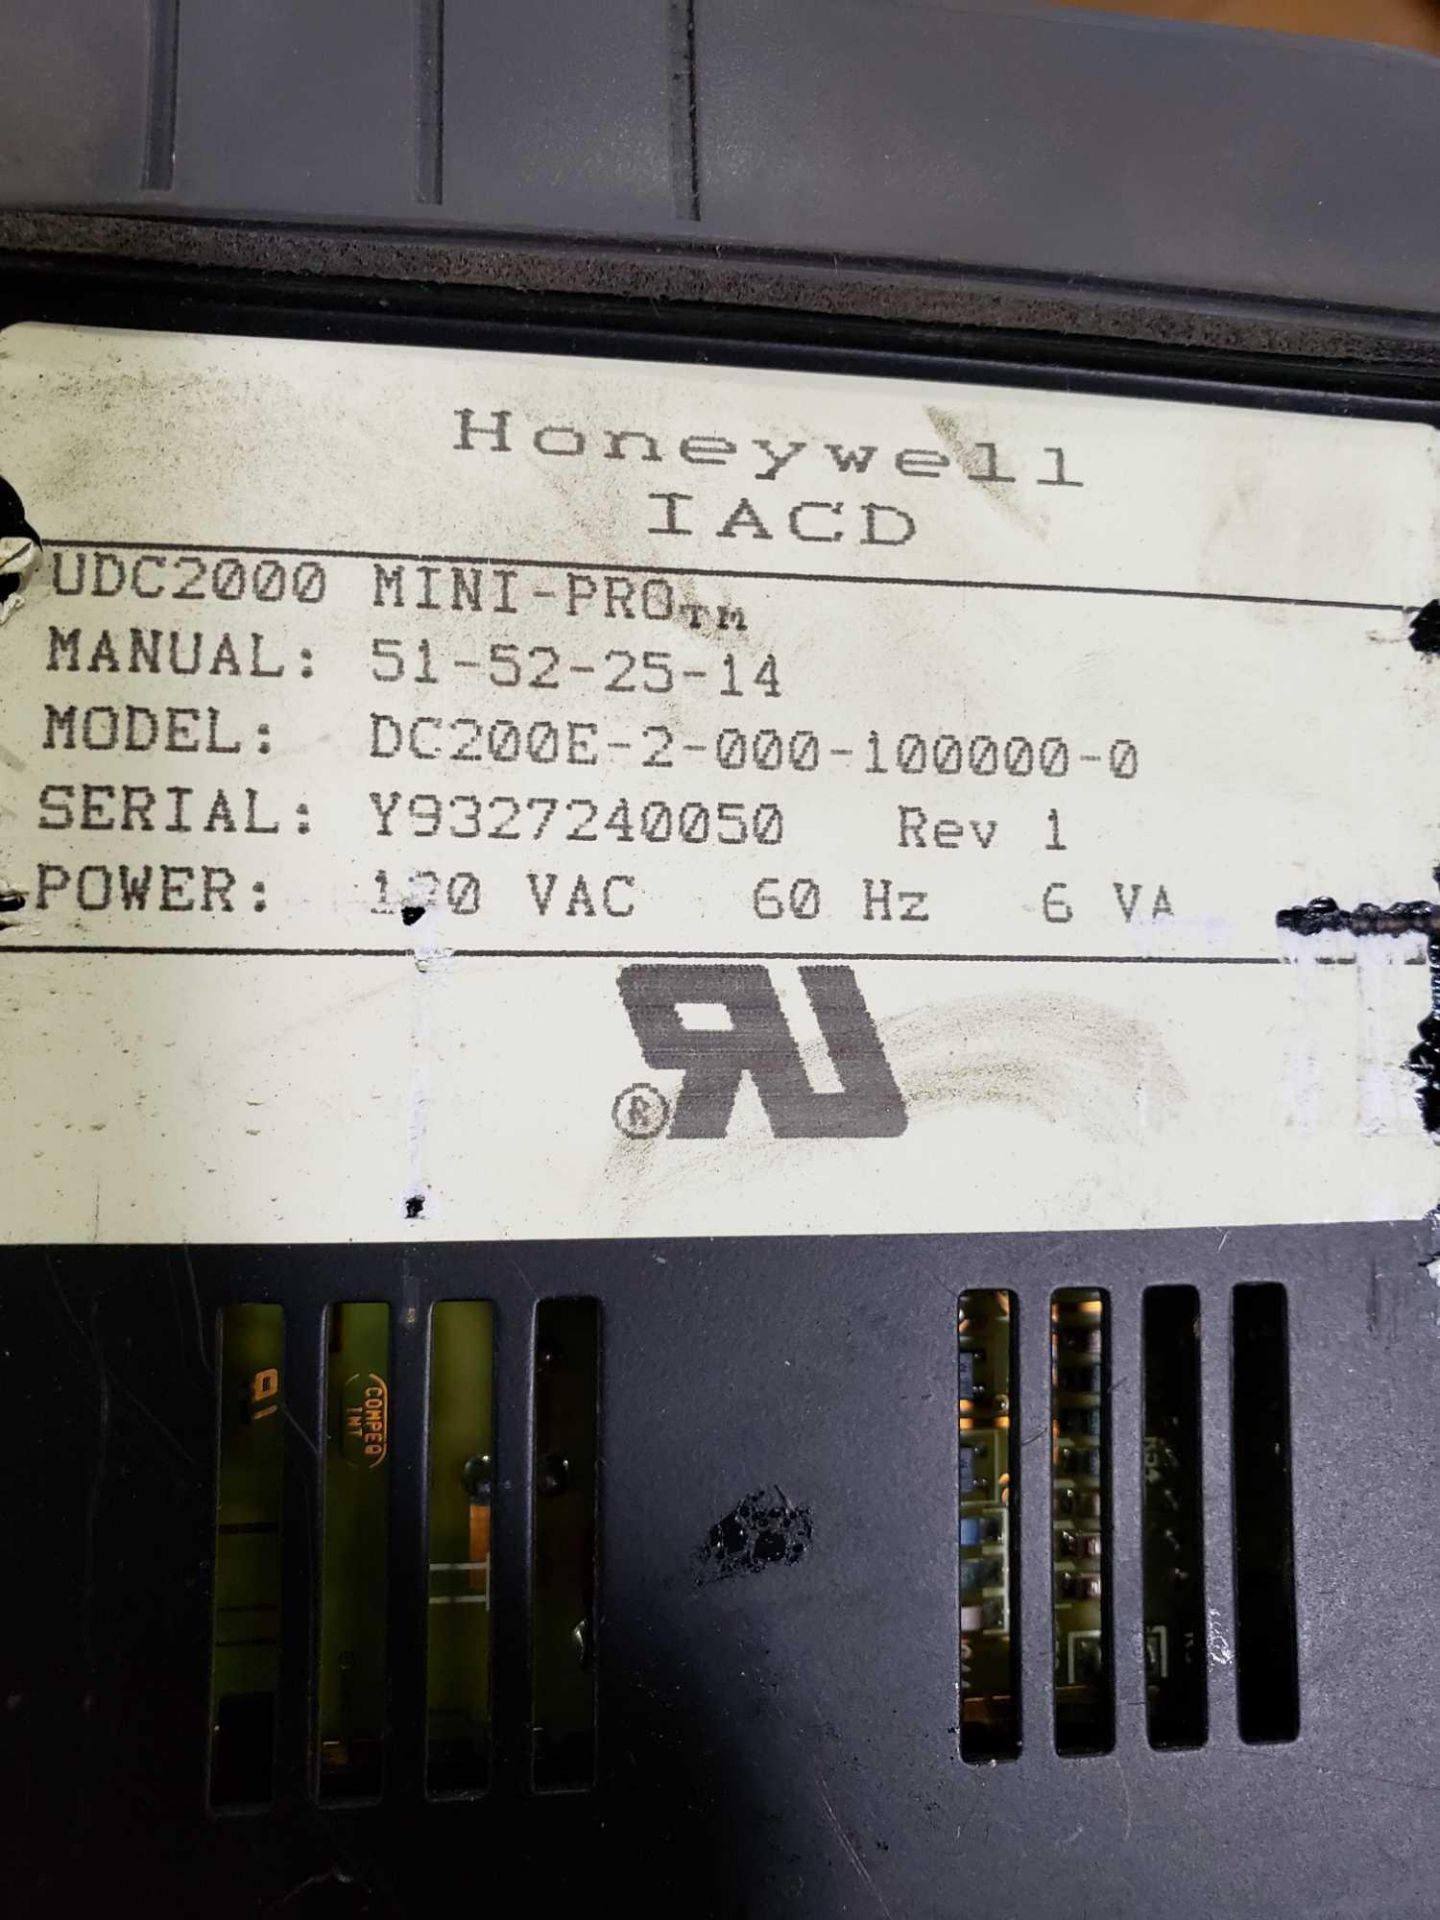 Honeywell temperature controller UDC2000 mini-pro model number DC200E-2-000-100000-0. - Image 2 of 2